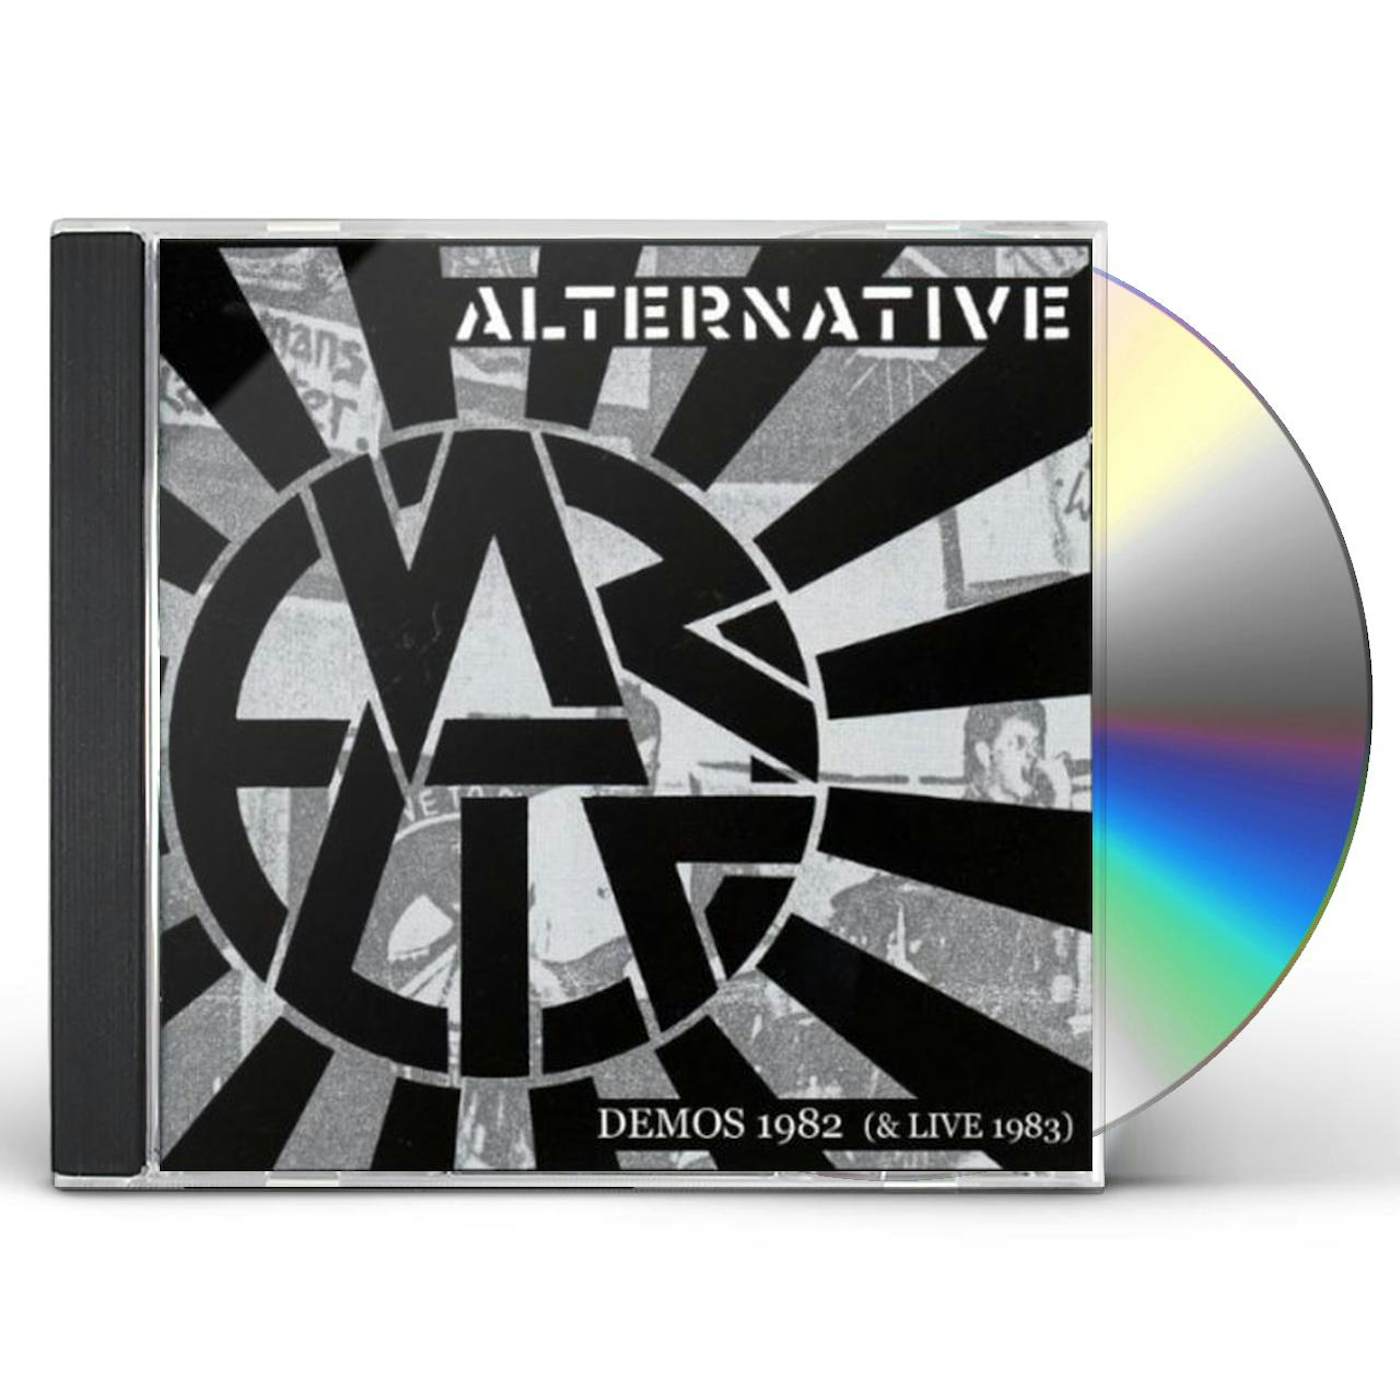 Alternative DEMOS 1982 (&LIVE 1983) CD